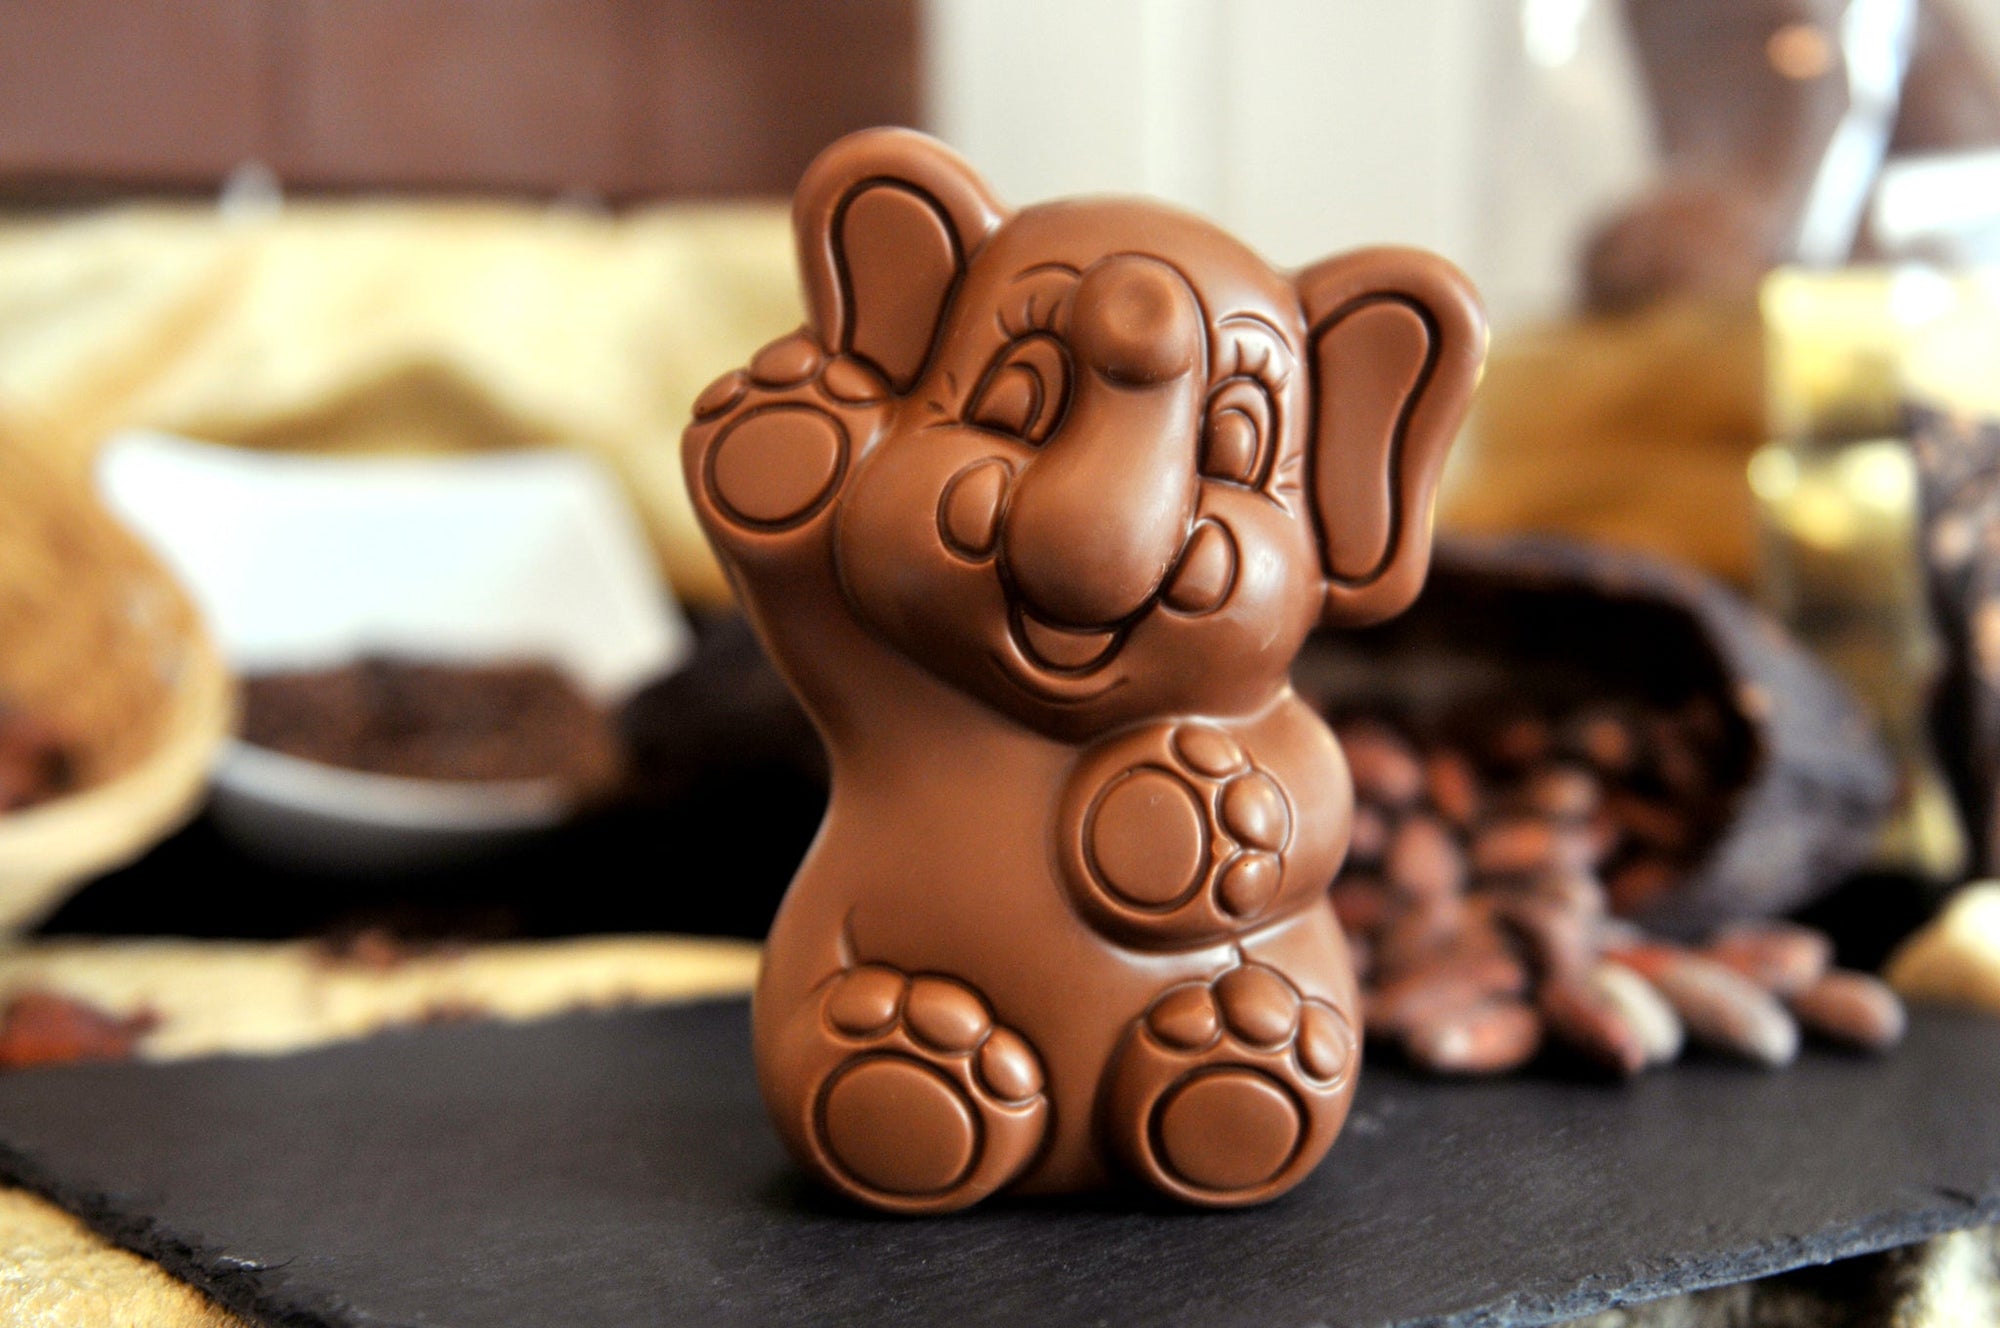 Handmade Belgian chocolate figurines on display - perfect as gifts or indulgent treats.